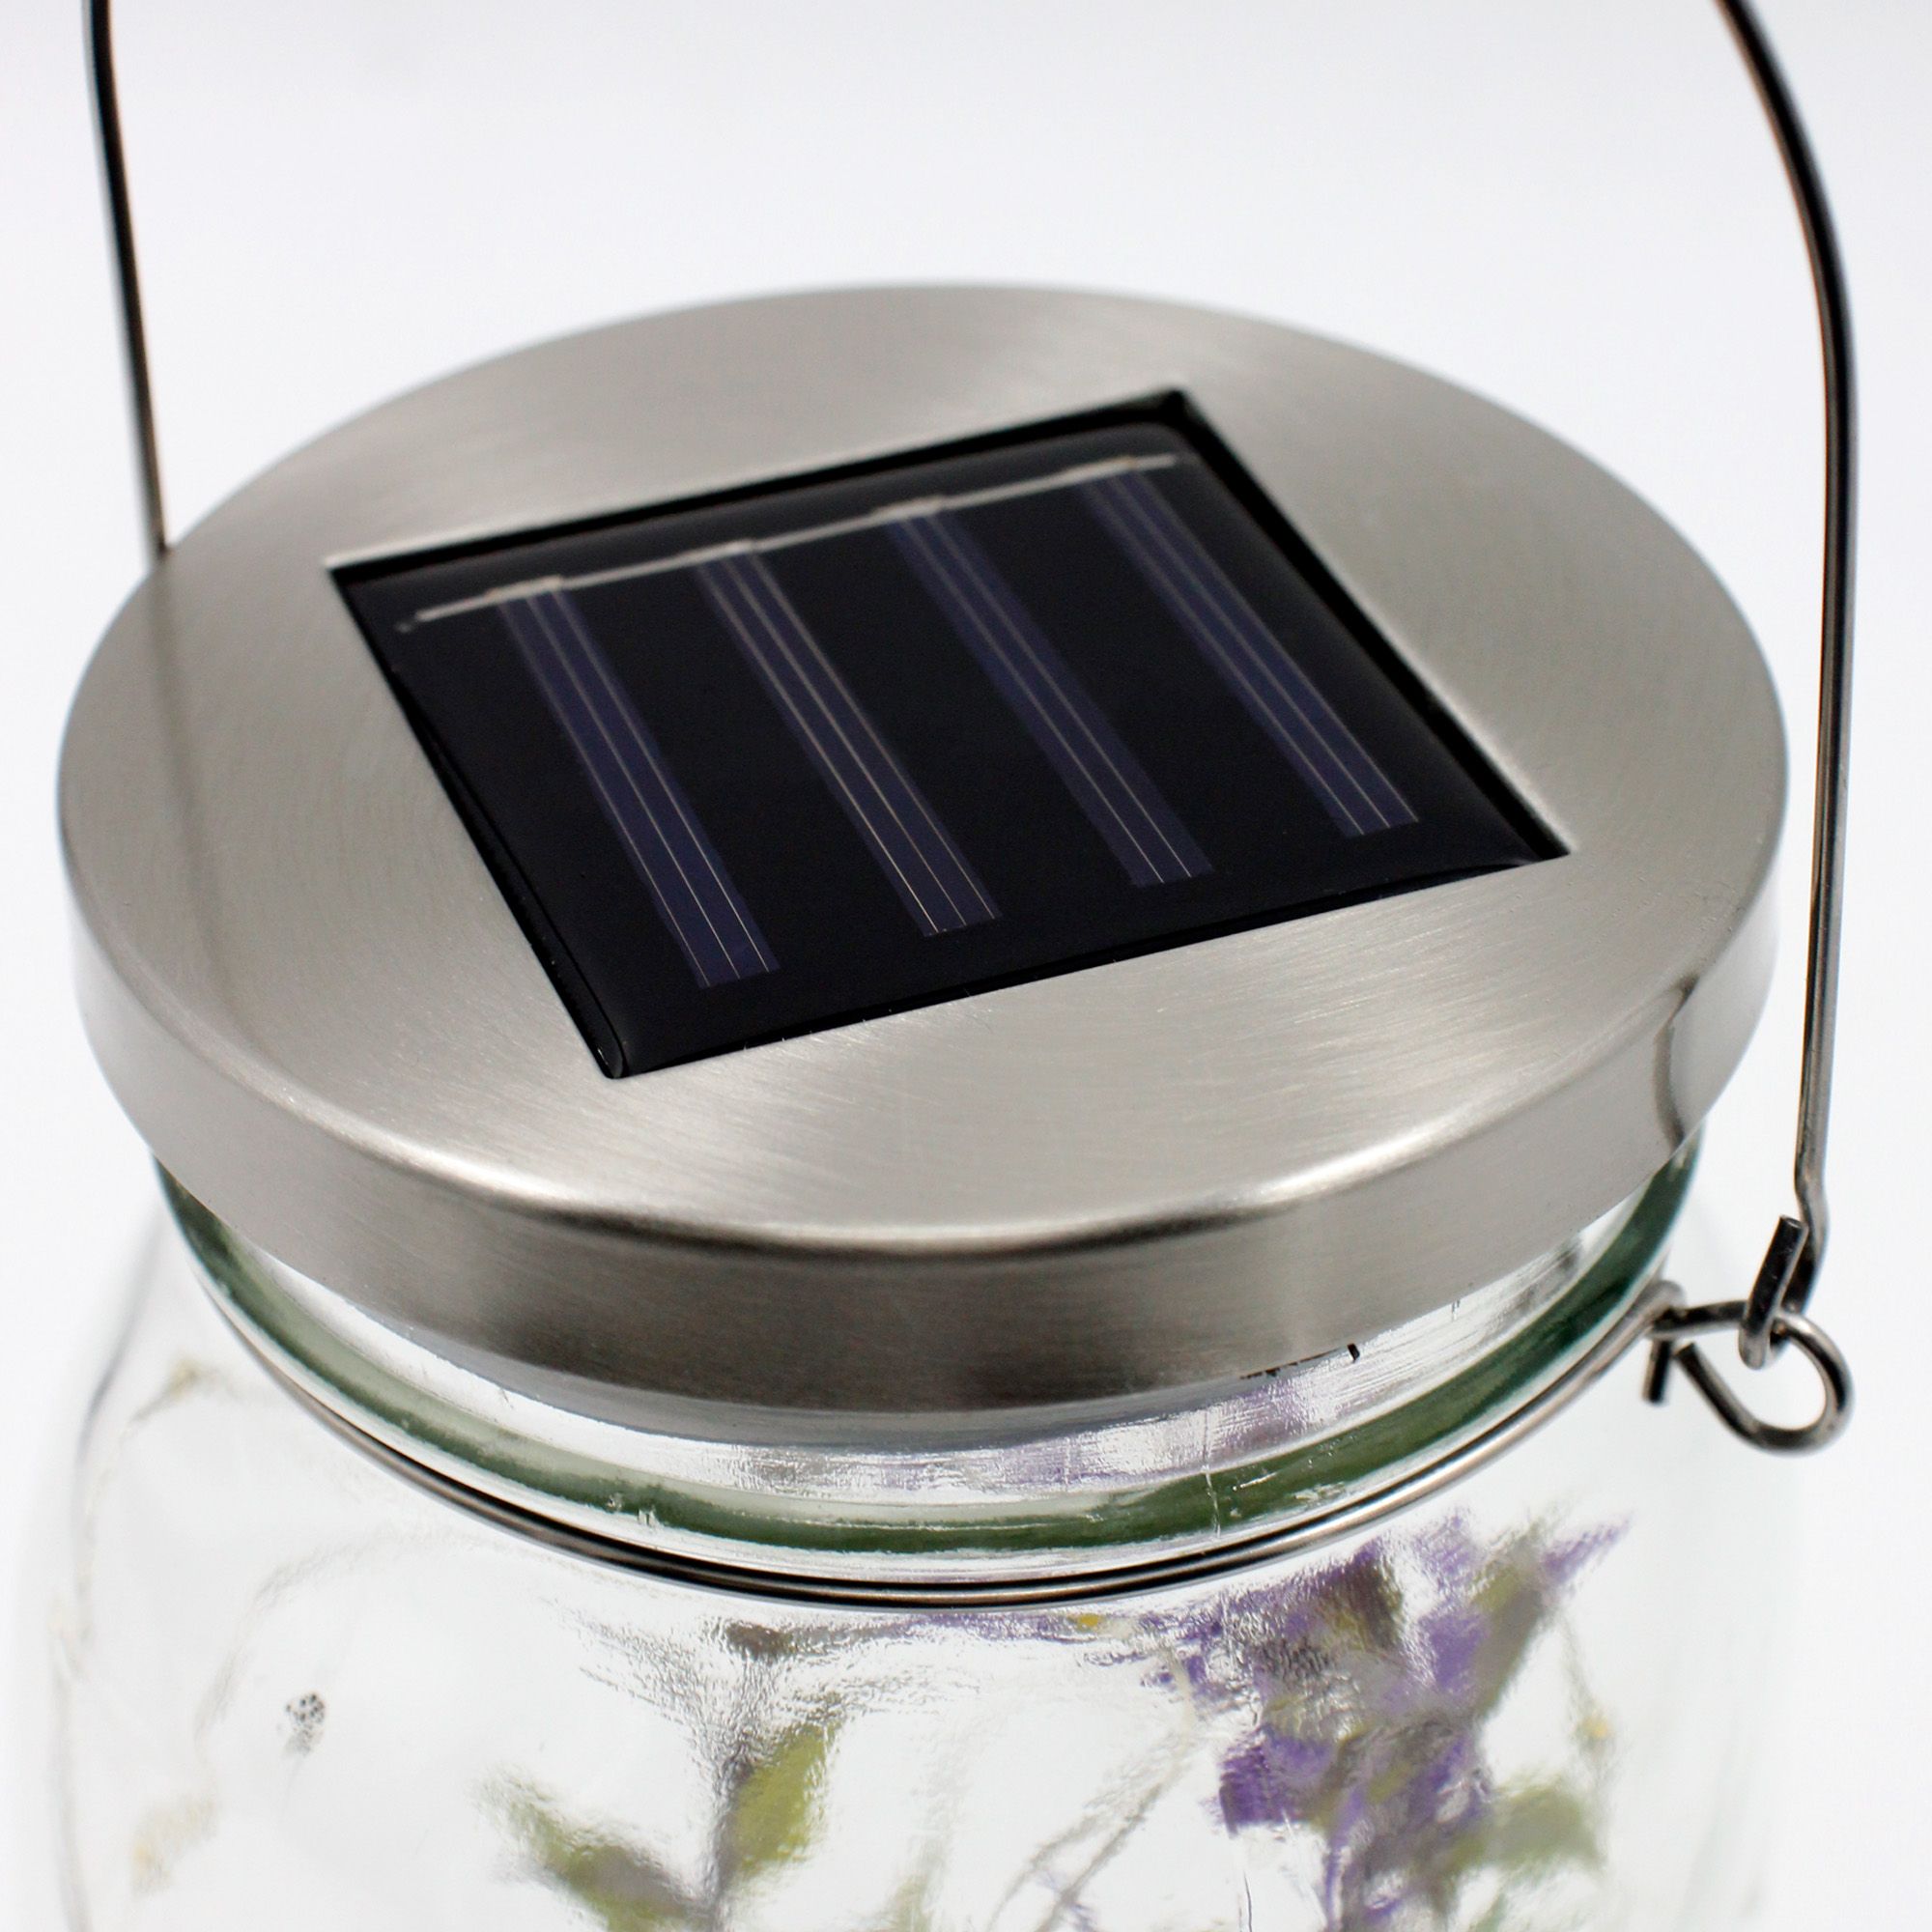 Kubija Clear Flower stem in jar Solar-powered Integrated LED Outdoor Decorative light